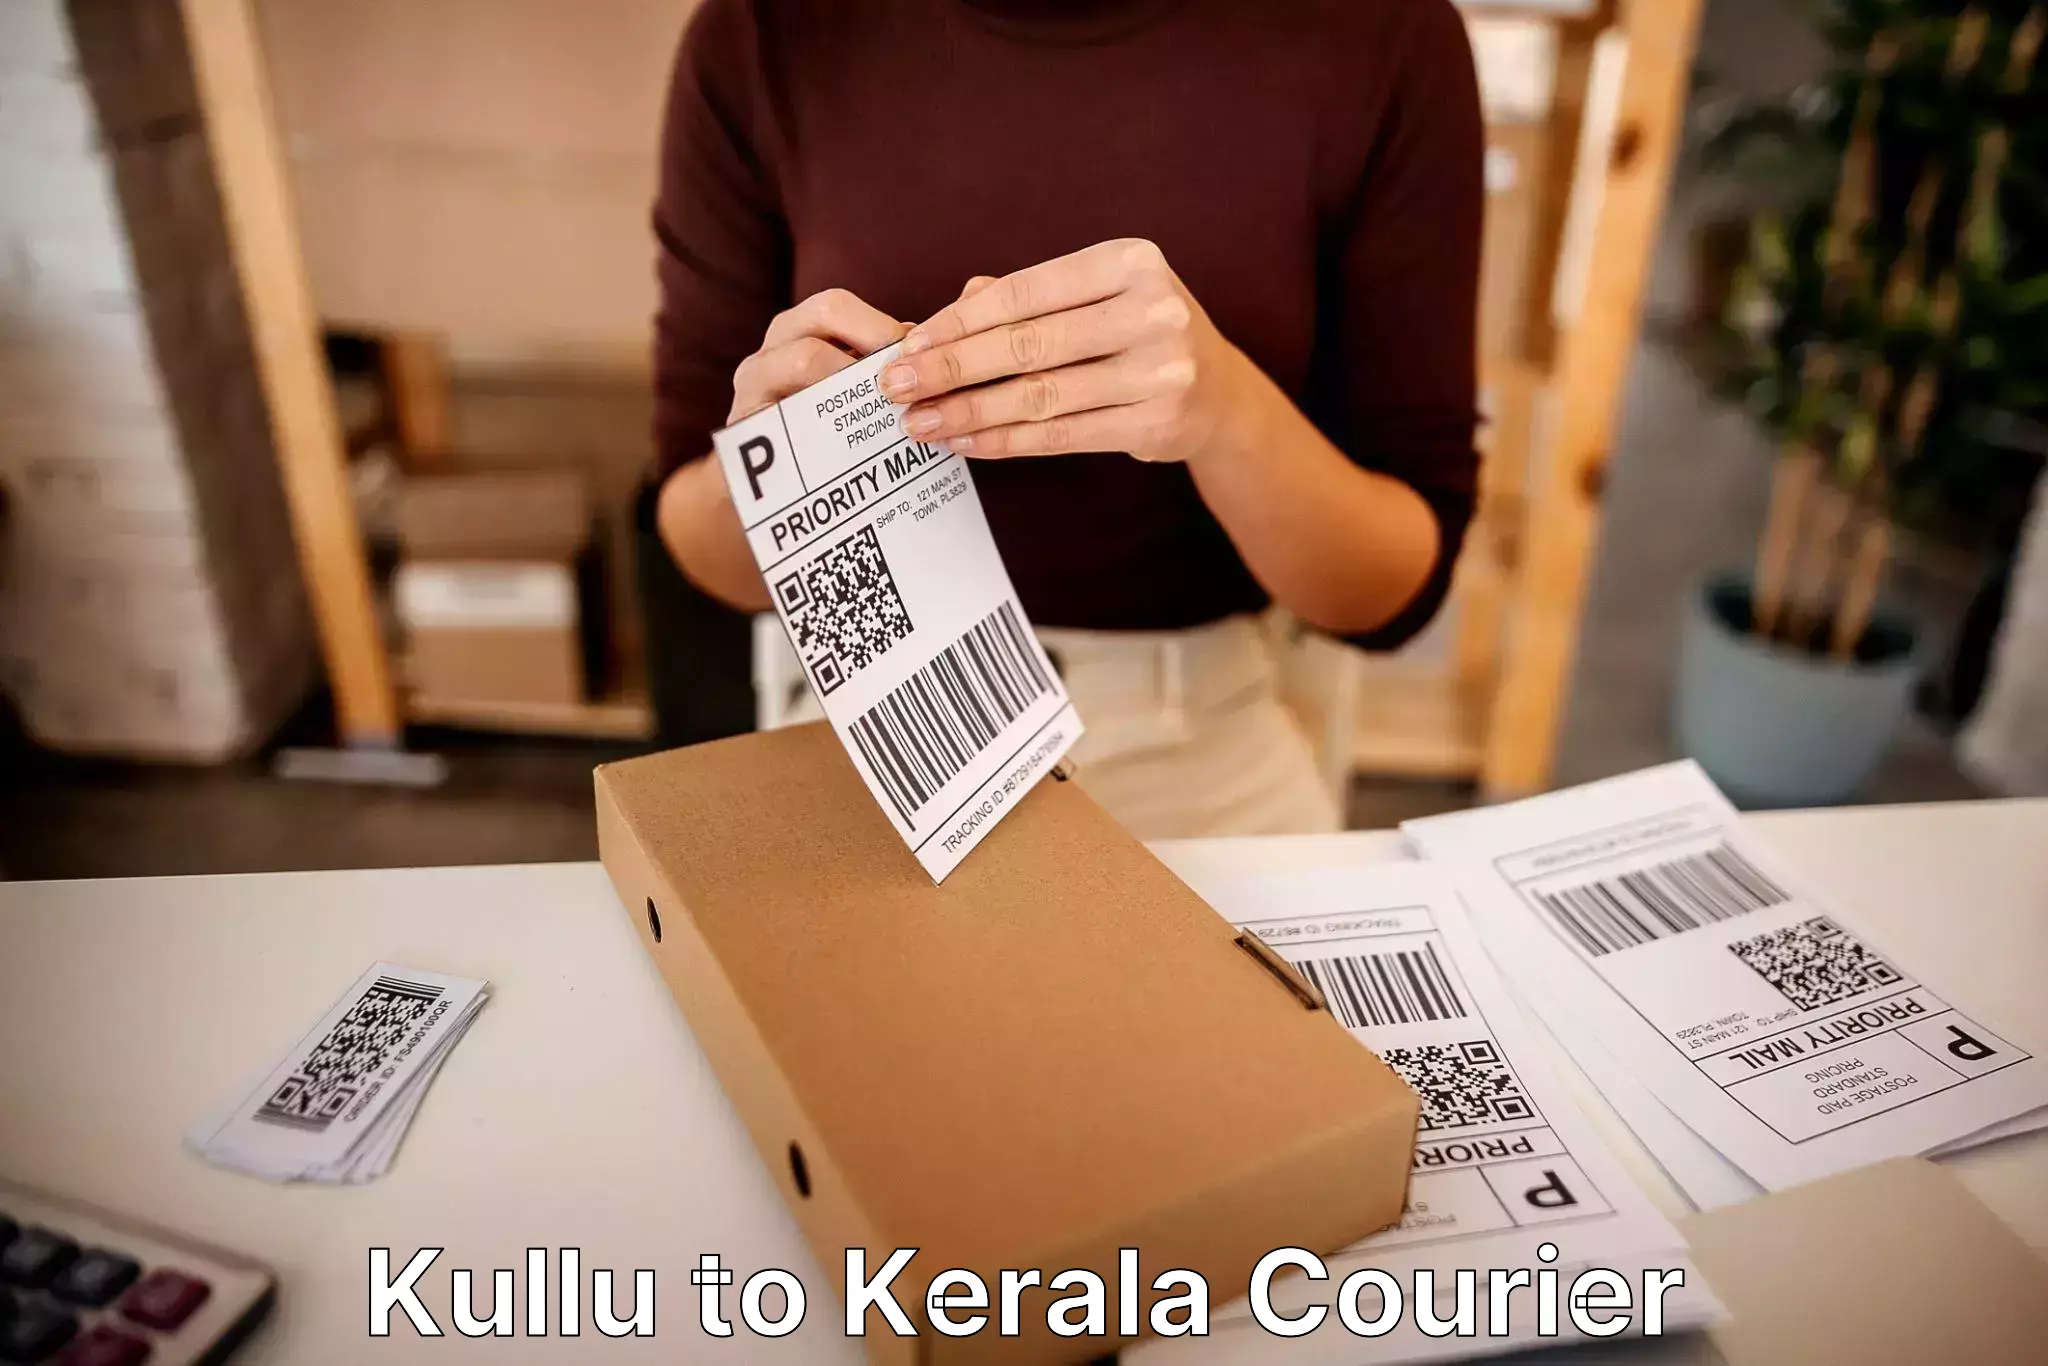 Efficient moving company Kullu to Kerala